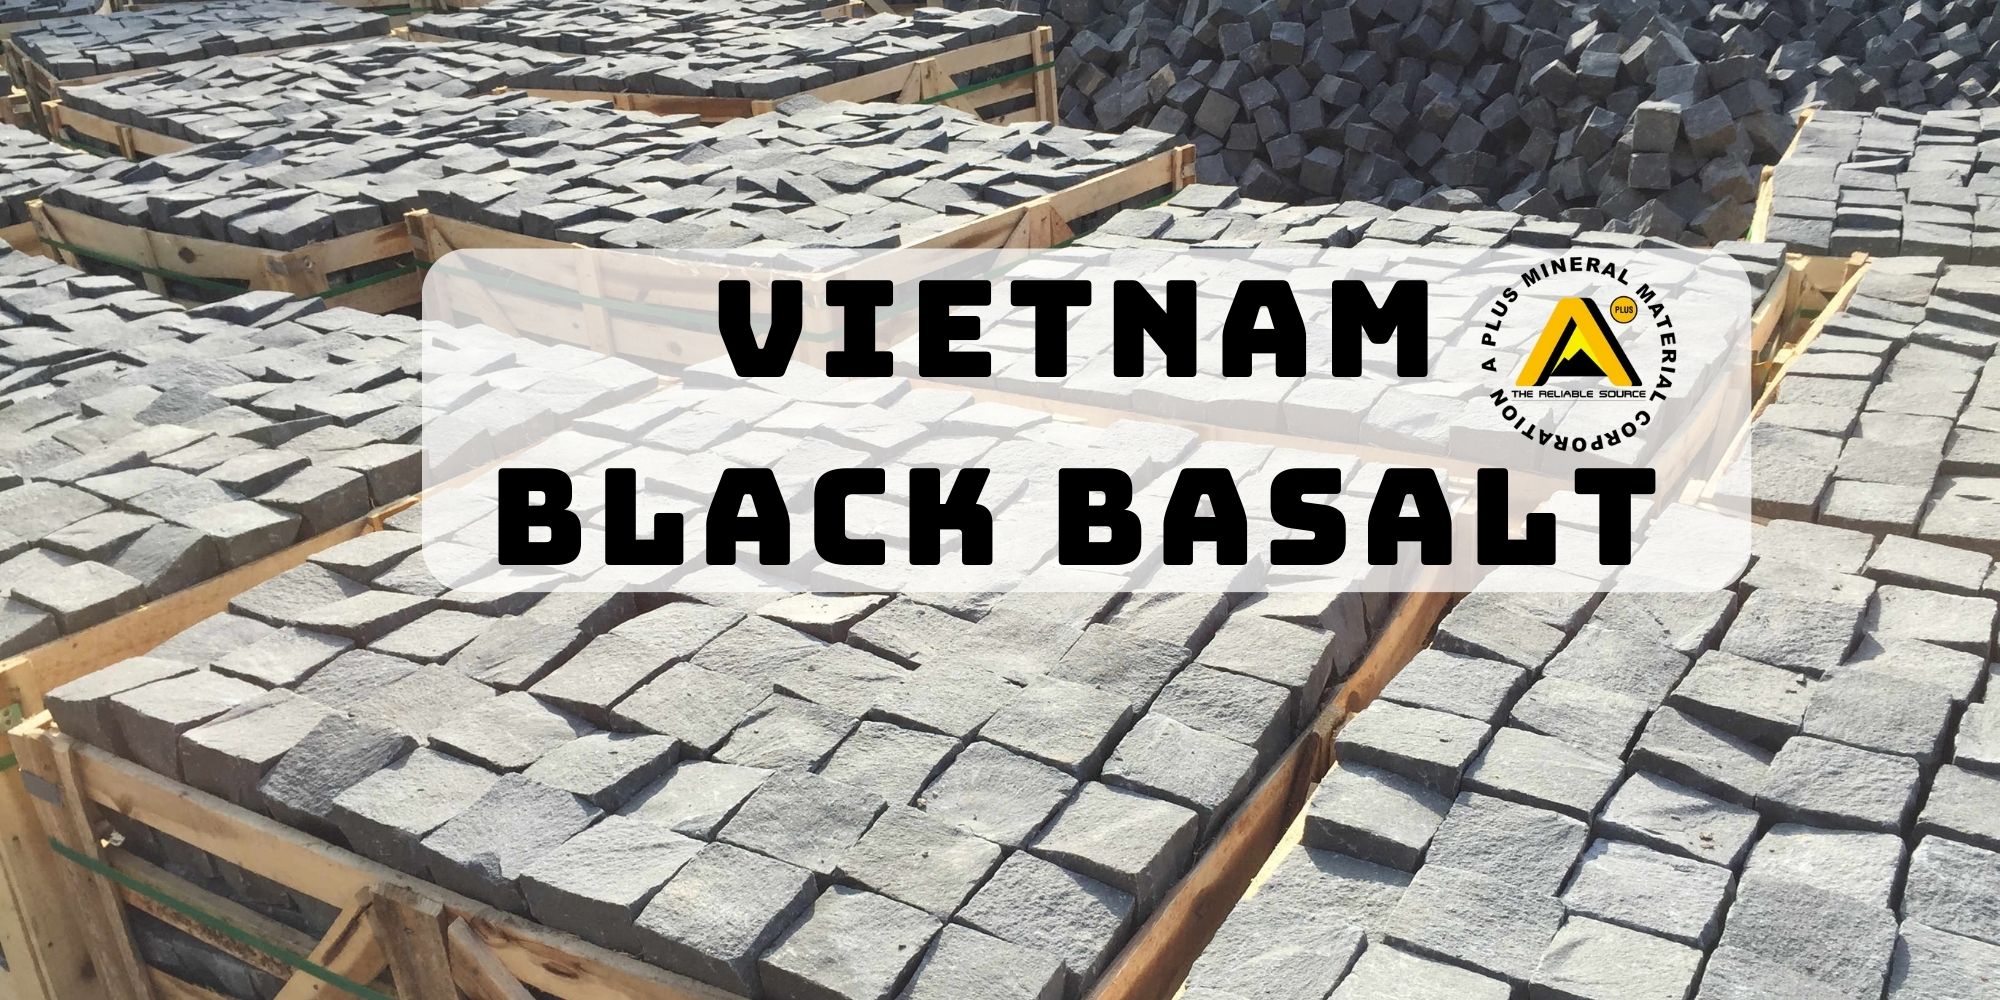 Vietnam Black Basalt